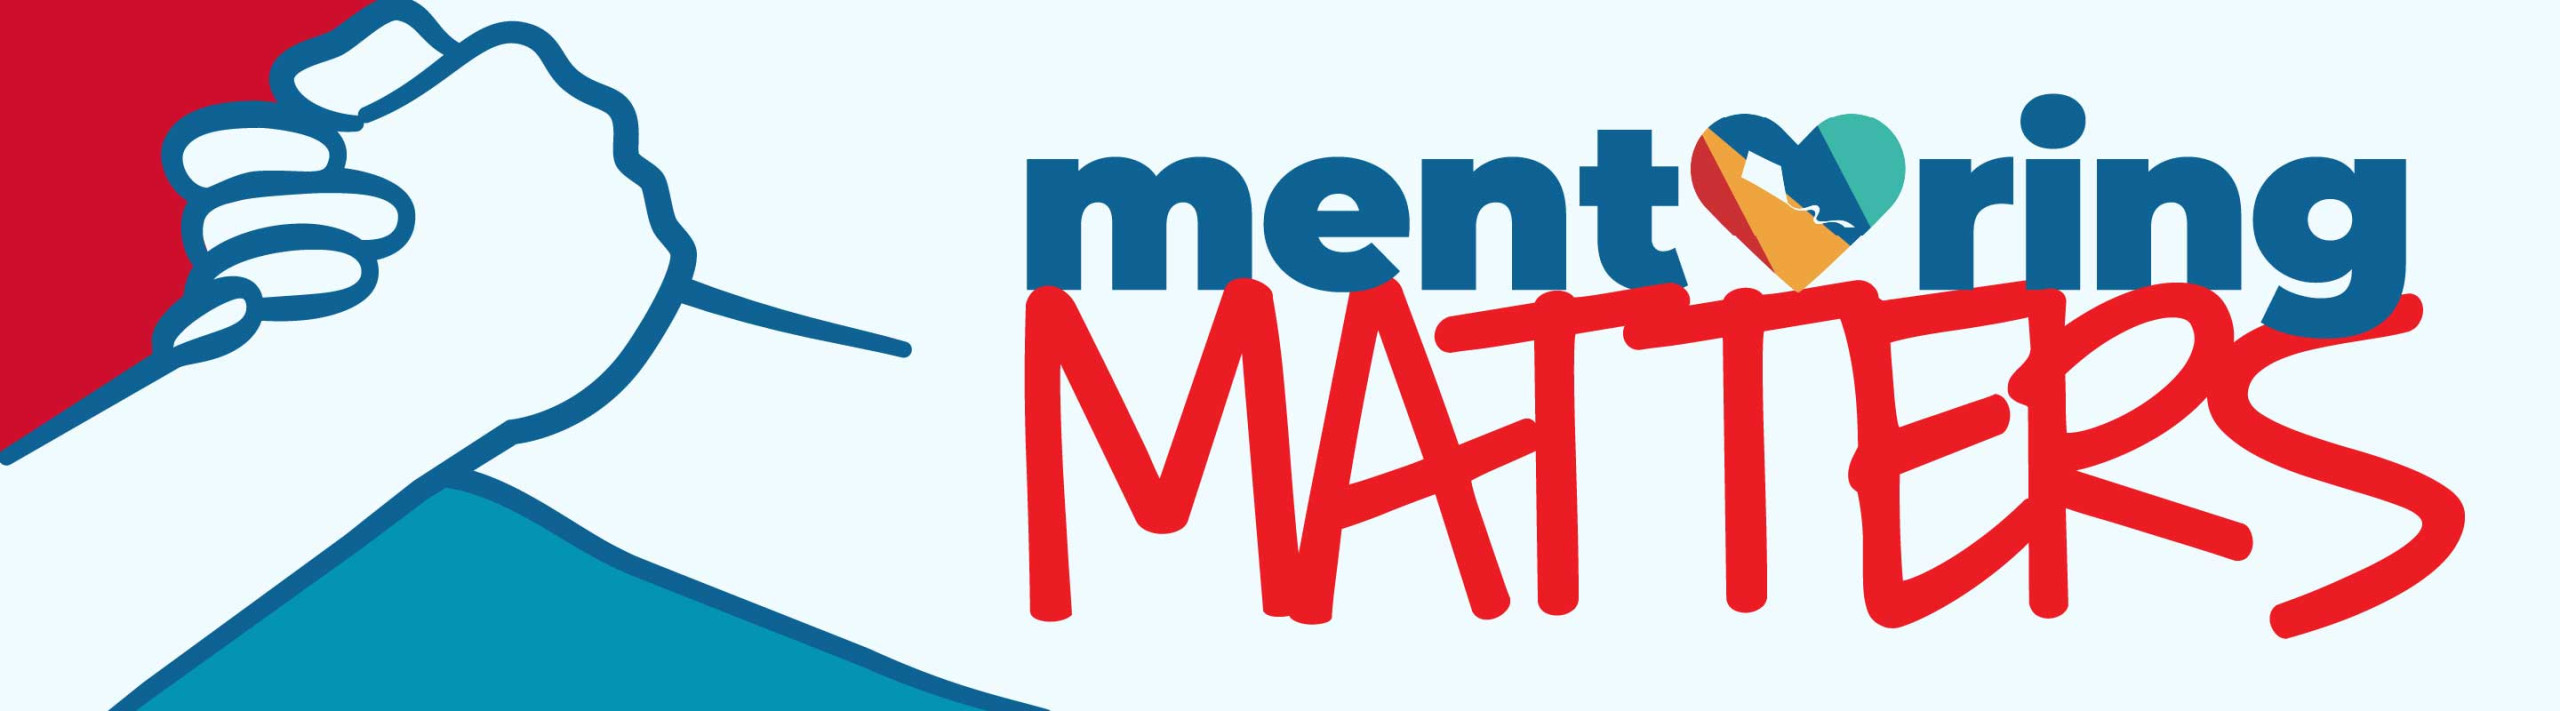 Mentoring Matters - National Mentoring month